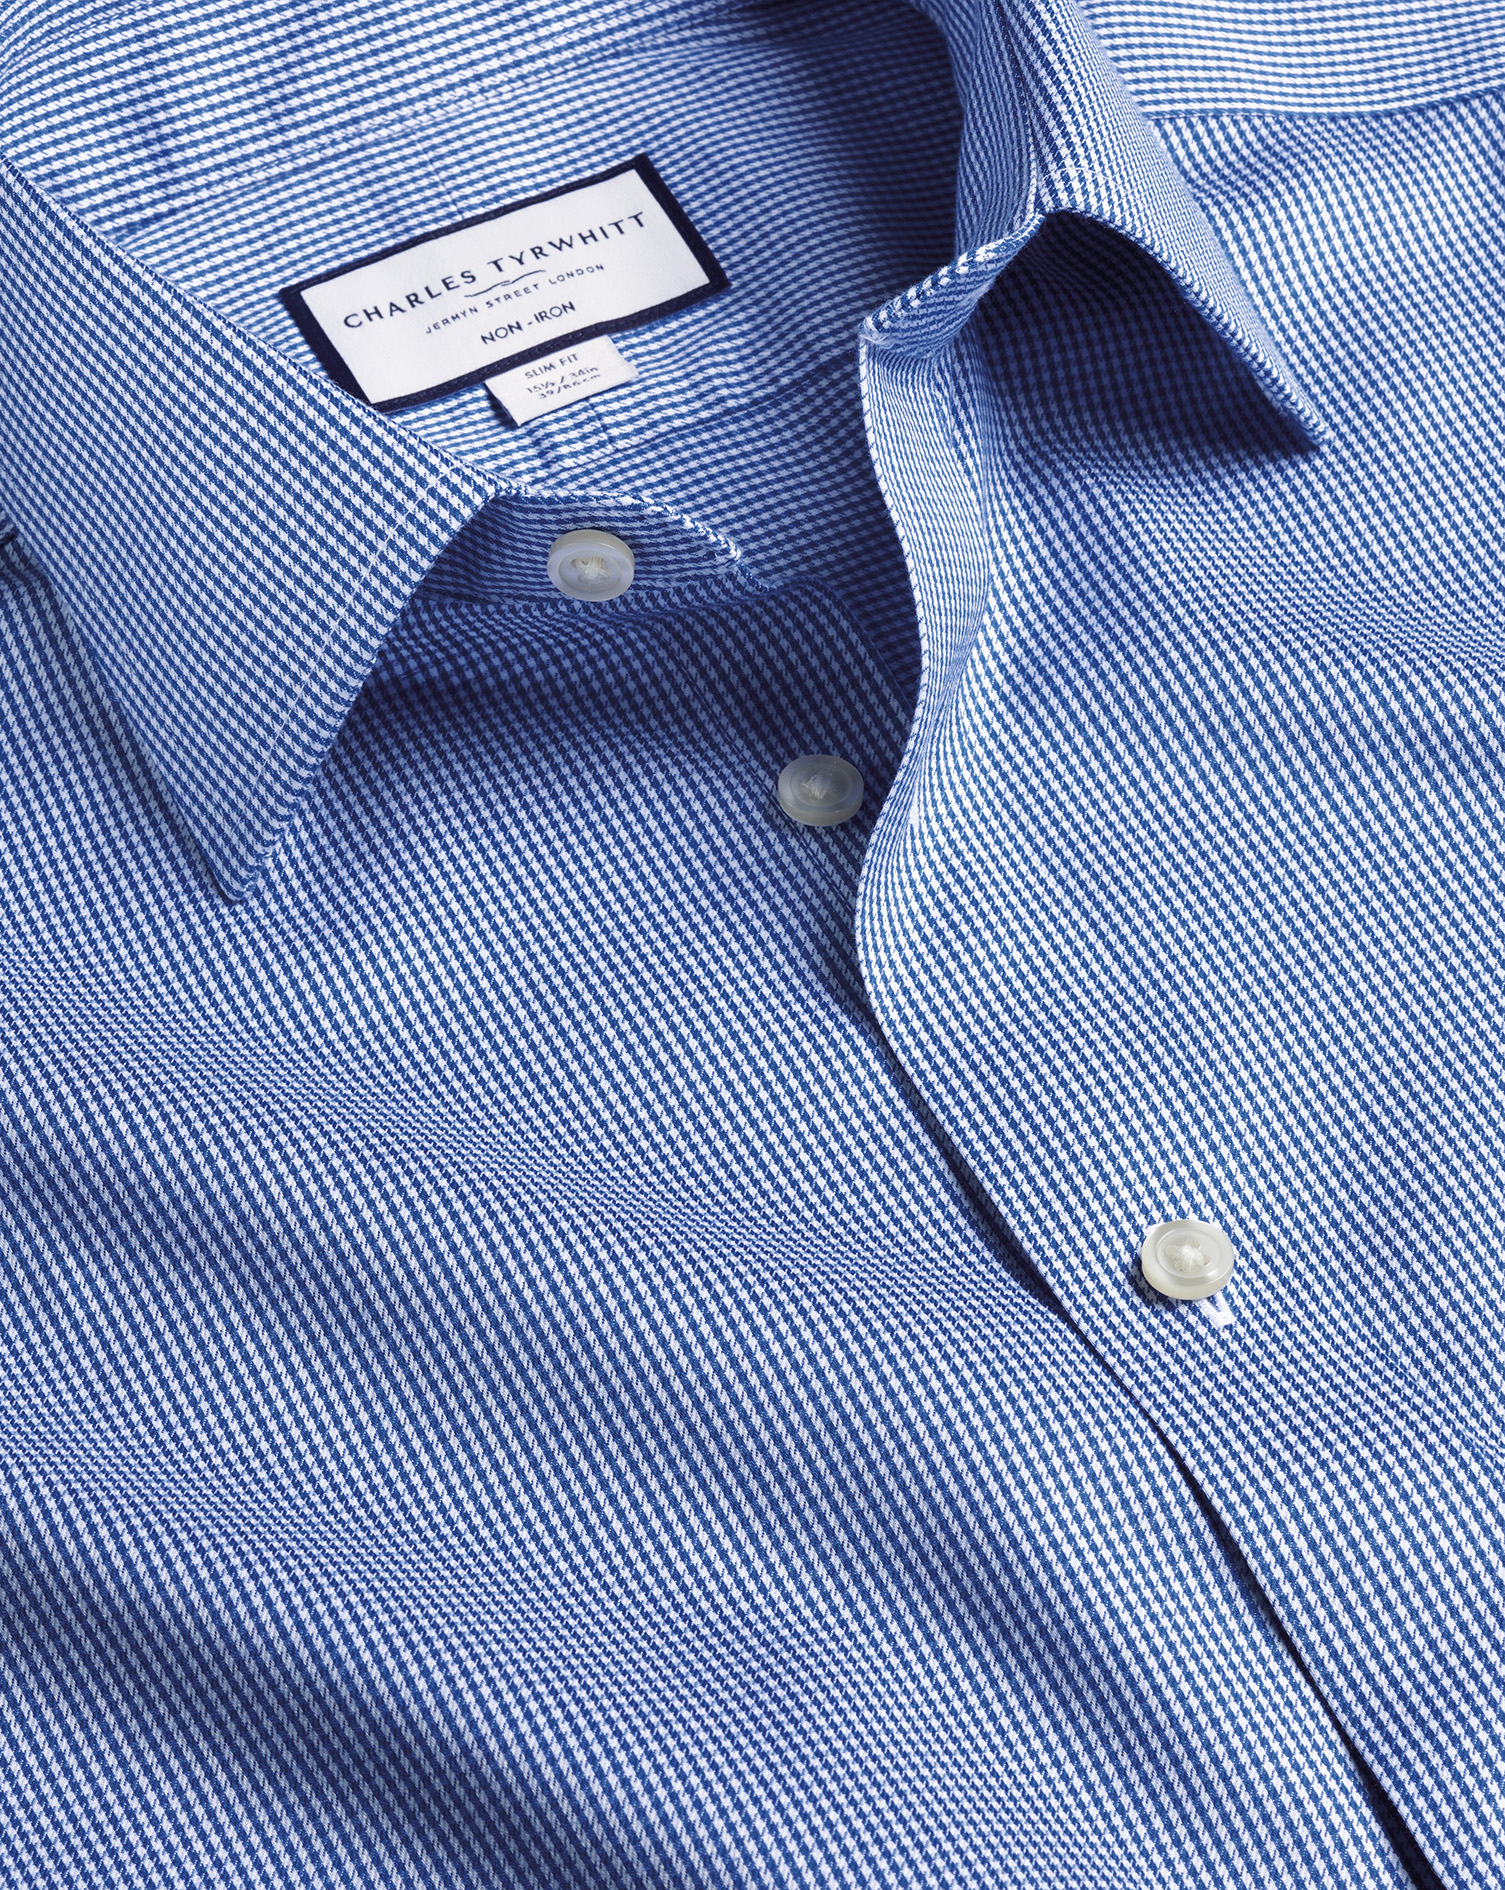 Men's Charles Tyrwhitt Non-Iron Puppytooth Dress Shirt - Royal Blue French Cuff Size XXXL Cotton
